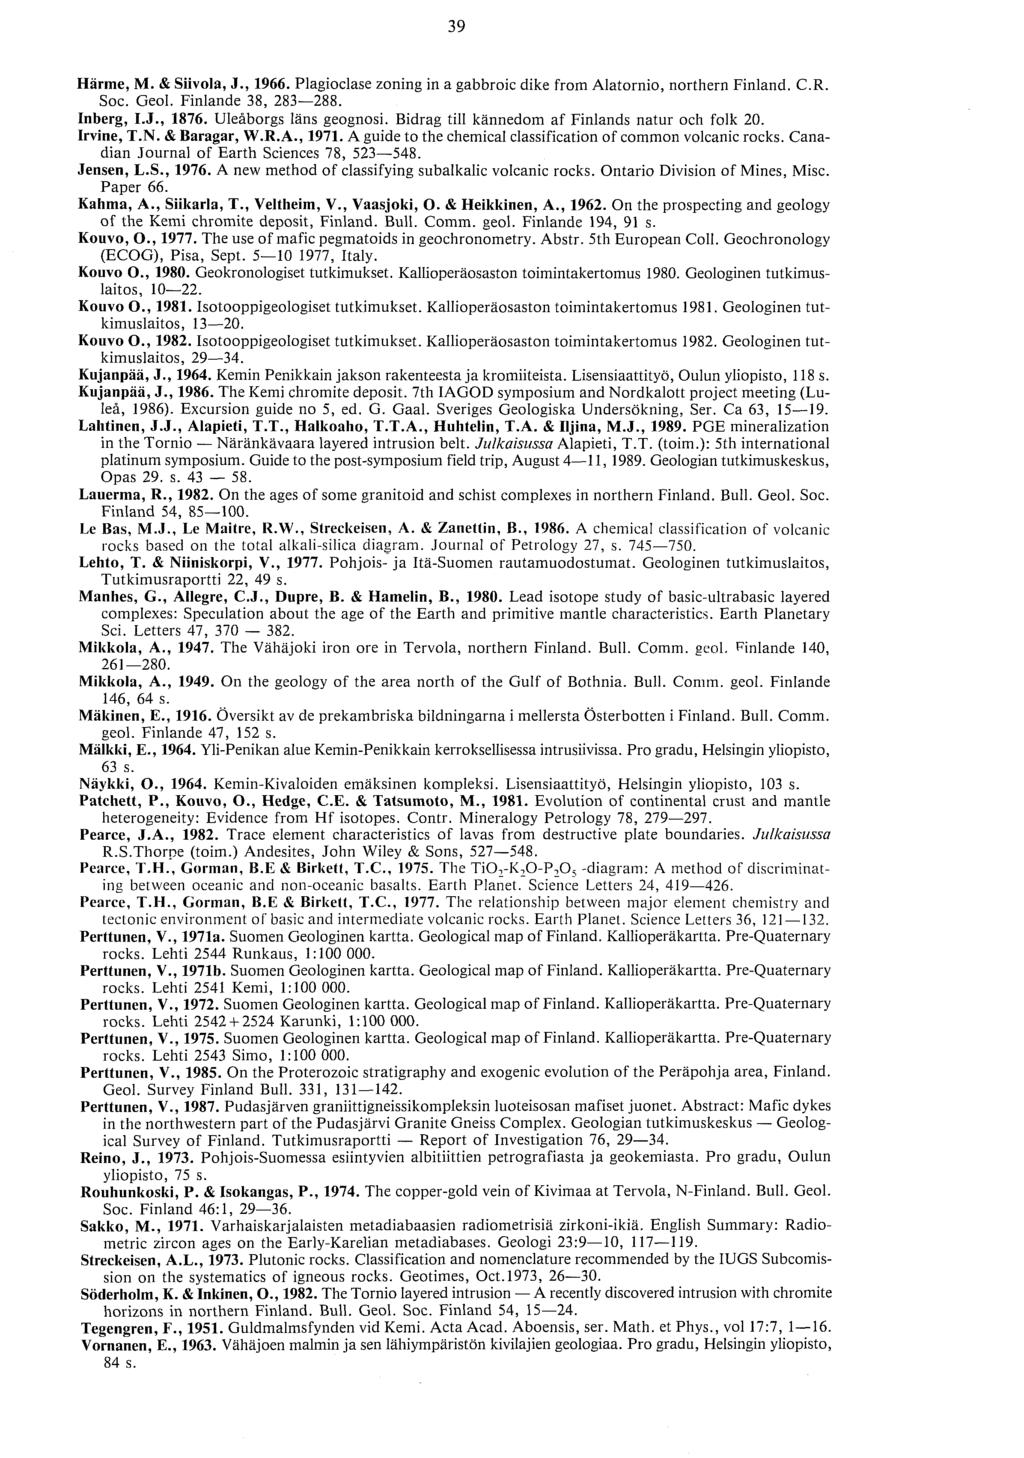 Harme, M. & Siivola, J., 1966. Plagioclase zoning in a gabbroic dike from Alatornio, northern Finland. C.R. Soc. Geol. Finlande 38, 283-288. Inberg, I.J., 1876. Ulesborgs lans geognosi.